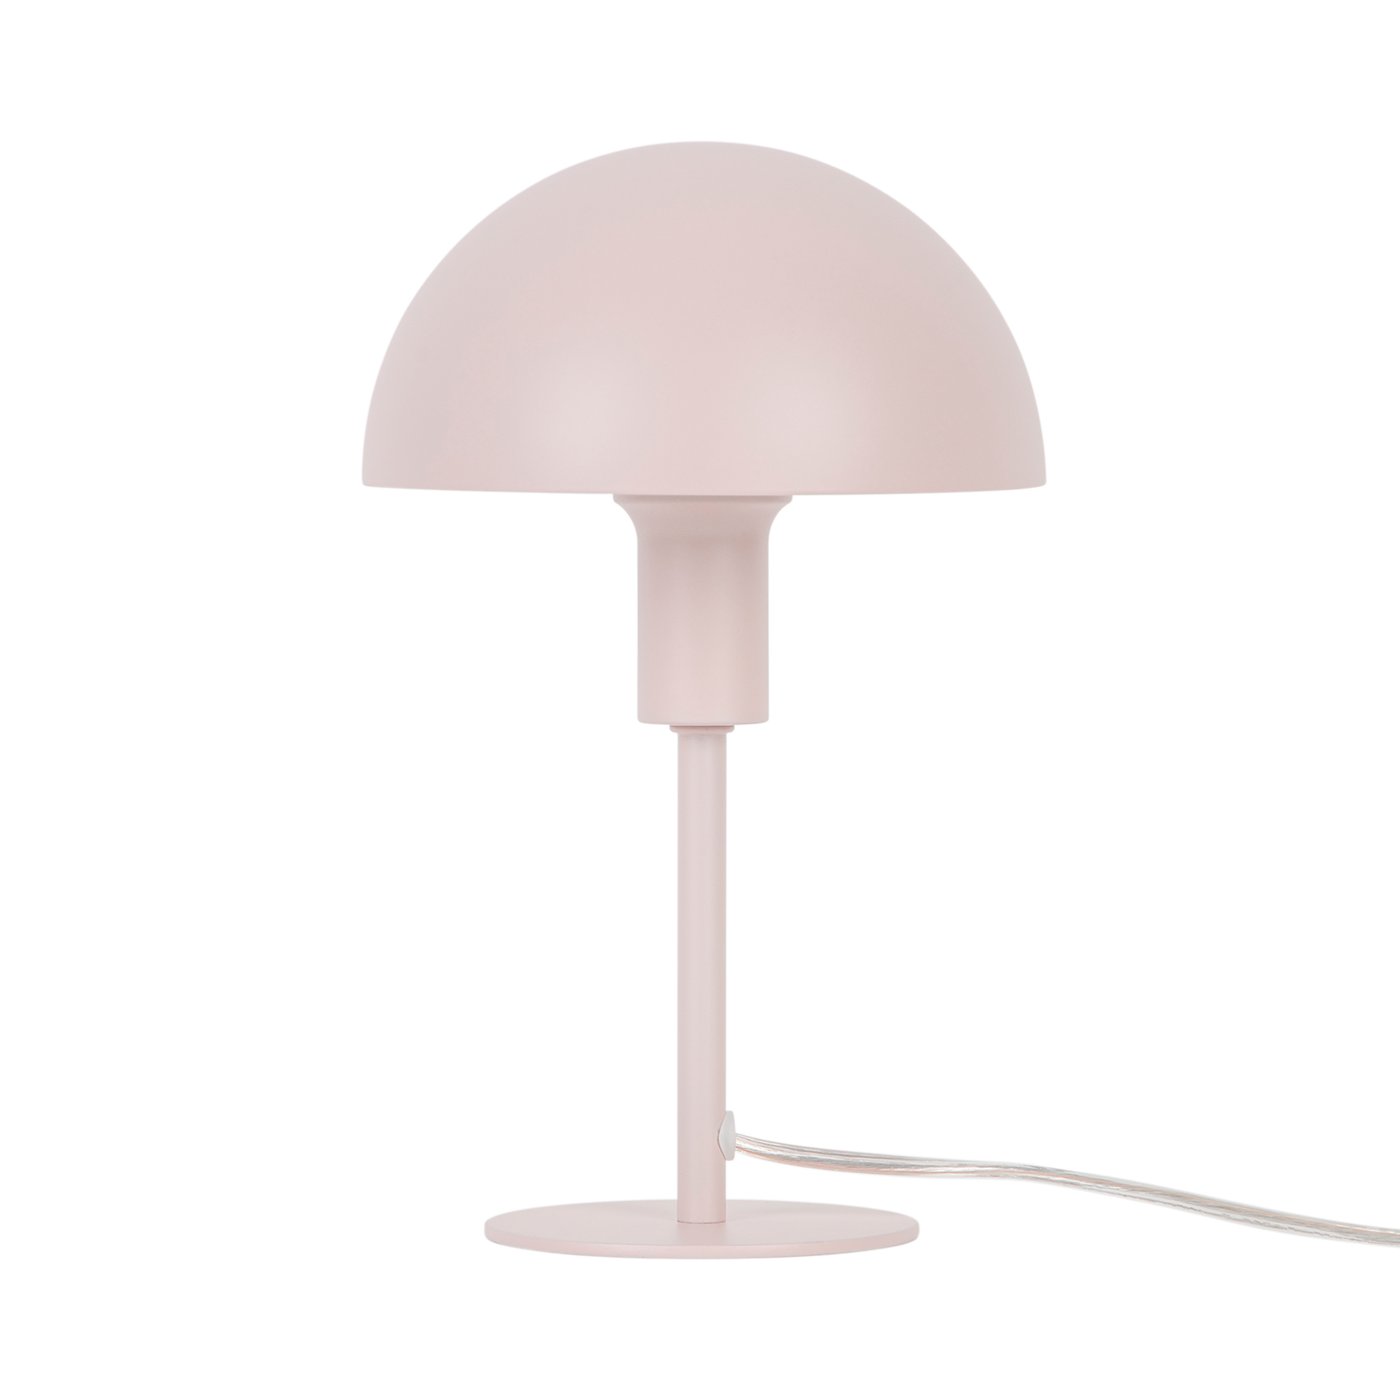 Tischlampe Ellen, mini, müggelig – staubig rosa